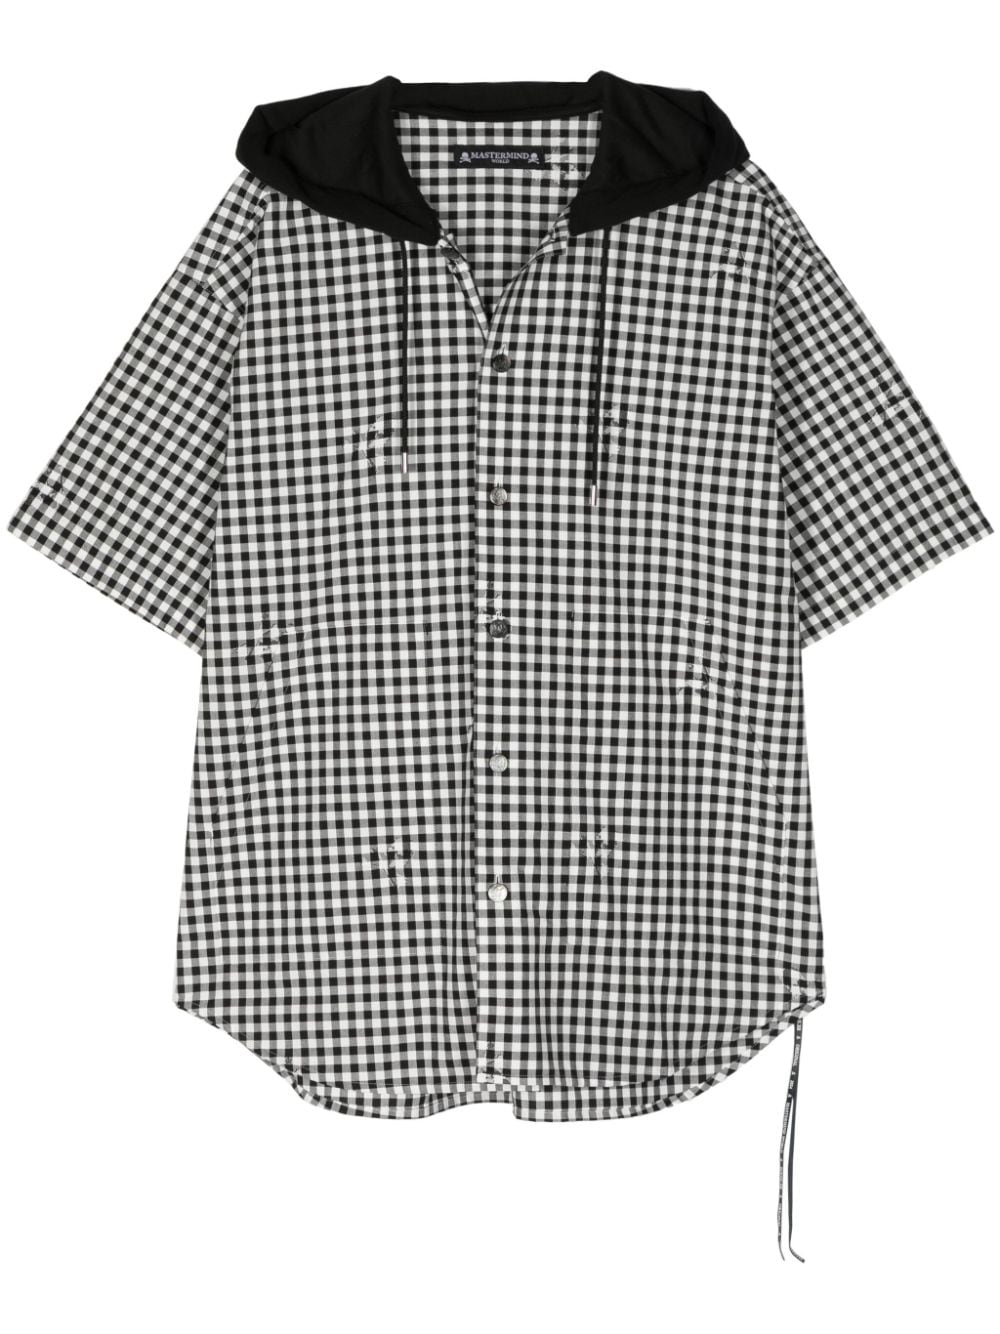 Mastermind Japan Plaid-check Hoodie Shirt In Black